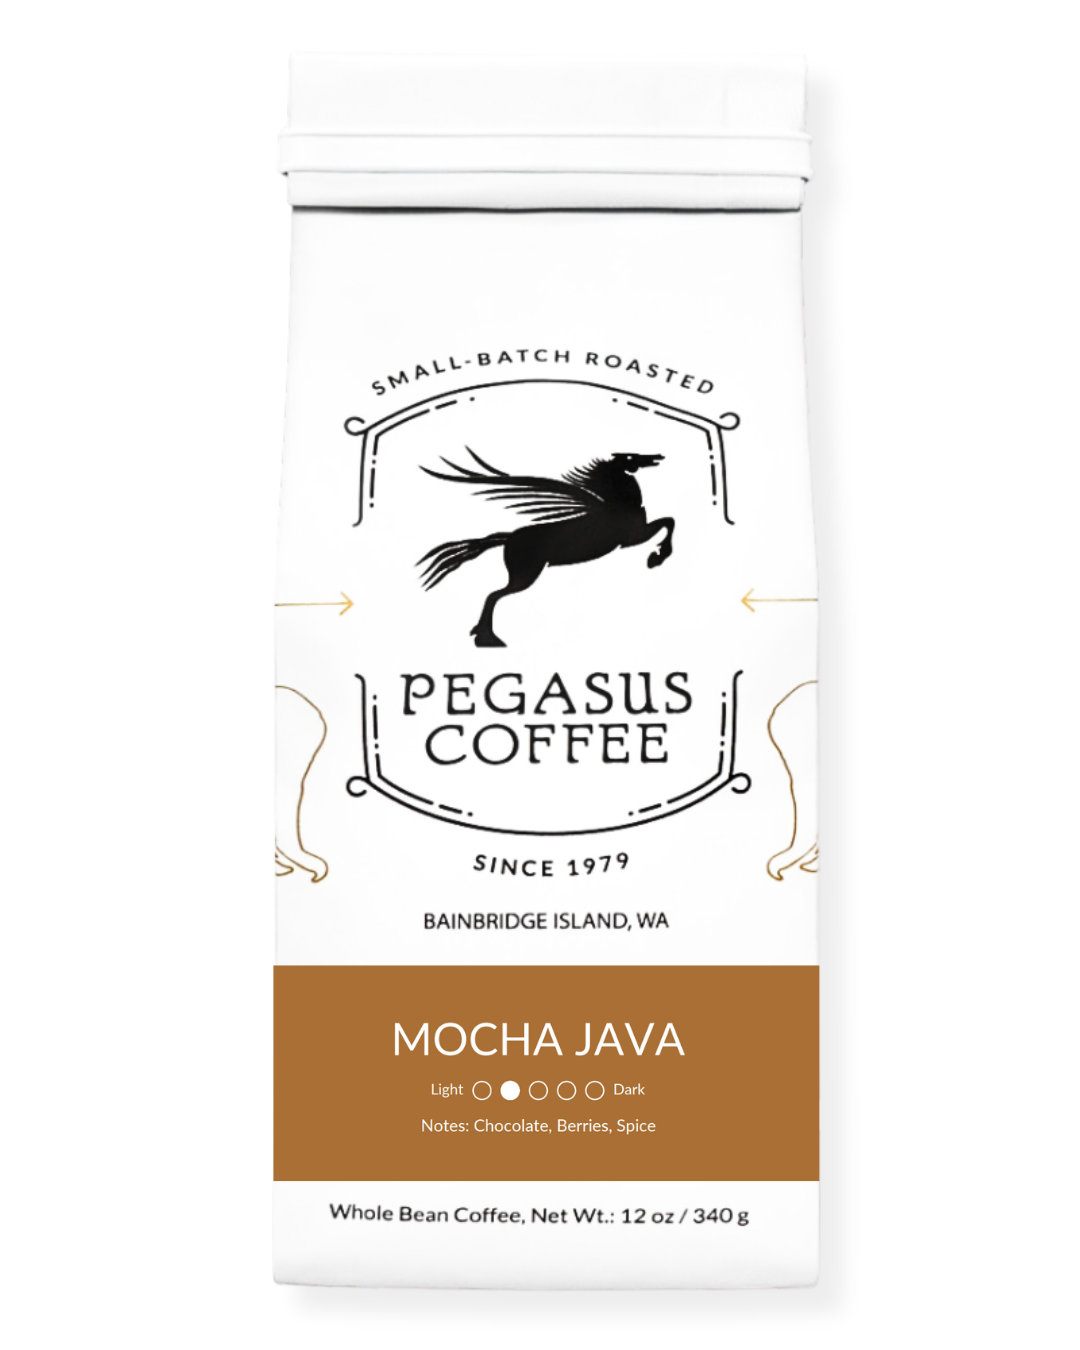 Mocha Java Pegasus Coffee